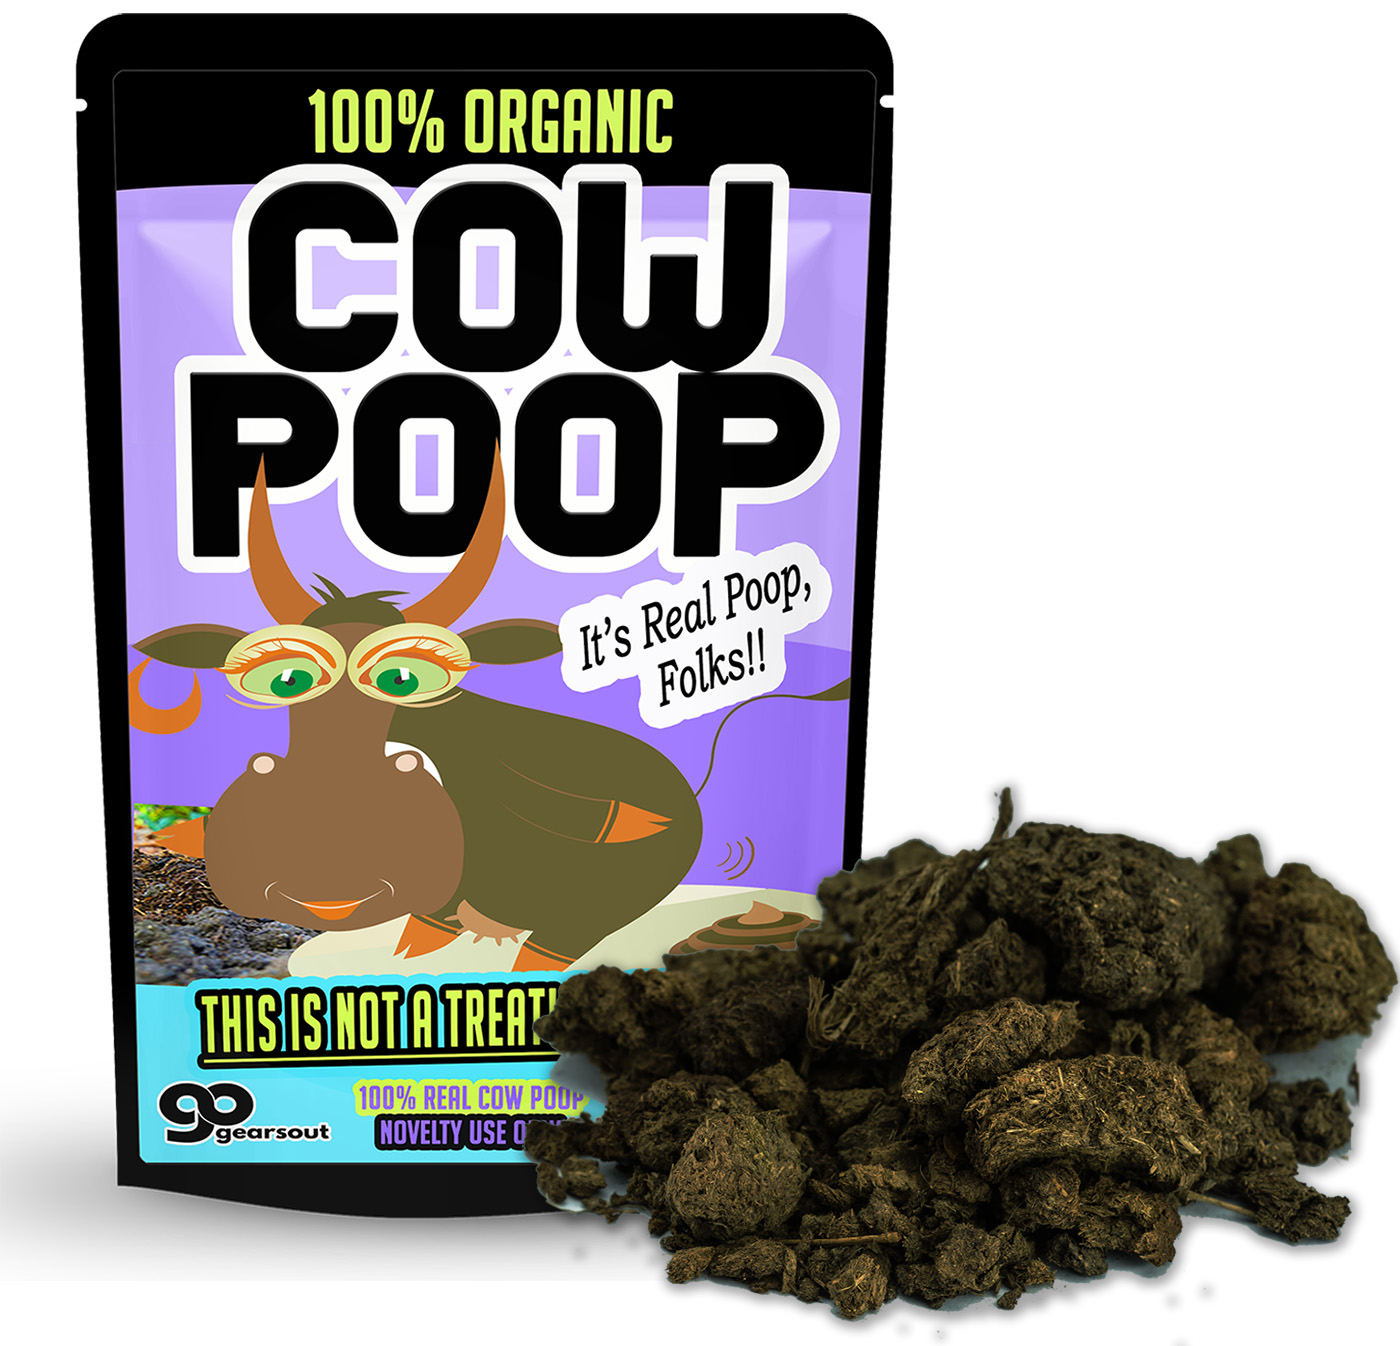 https://www.funslurp.com/images/Cow-poop-manure-gag-gift.jpg